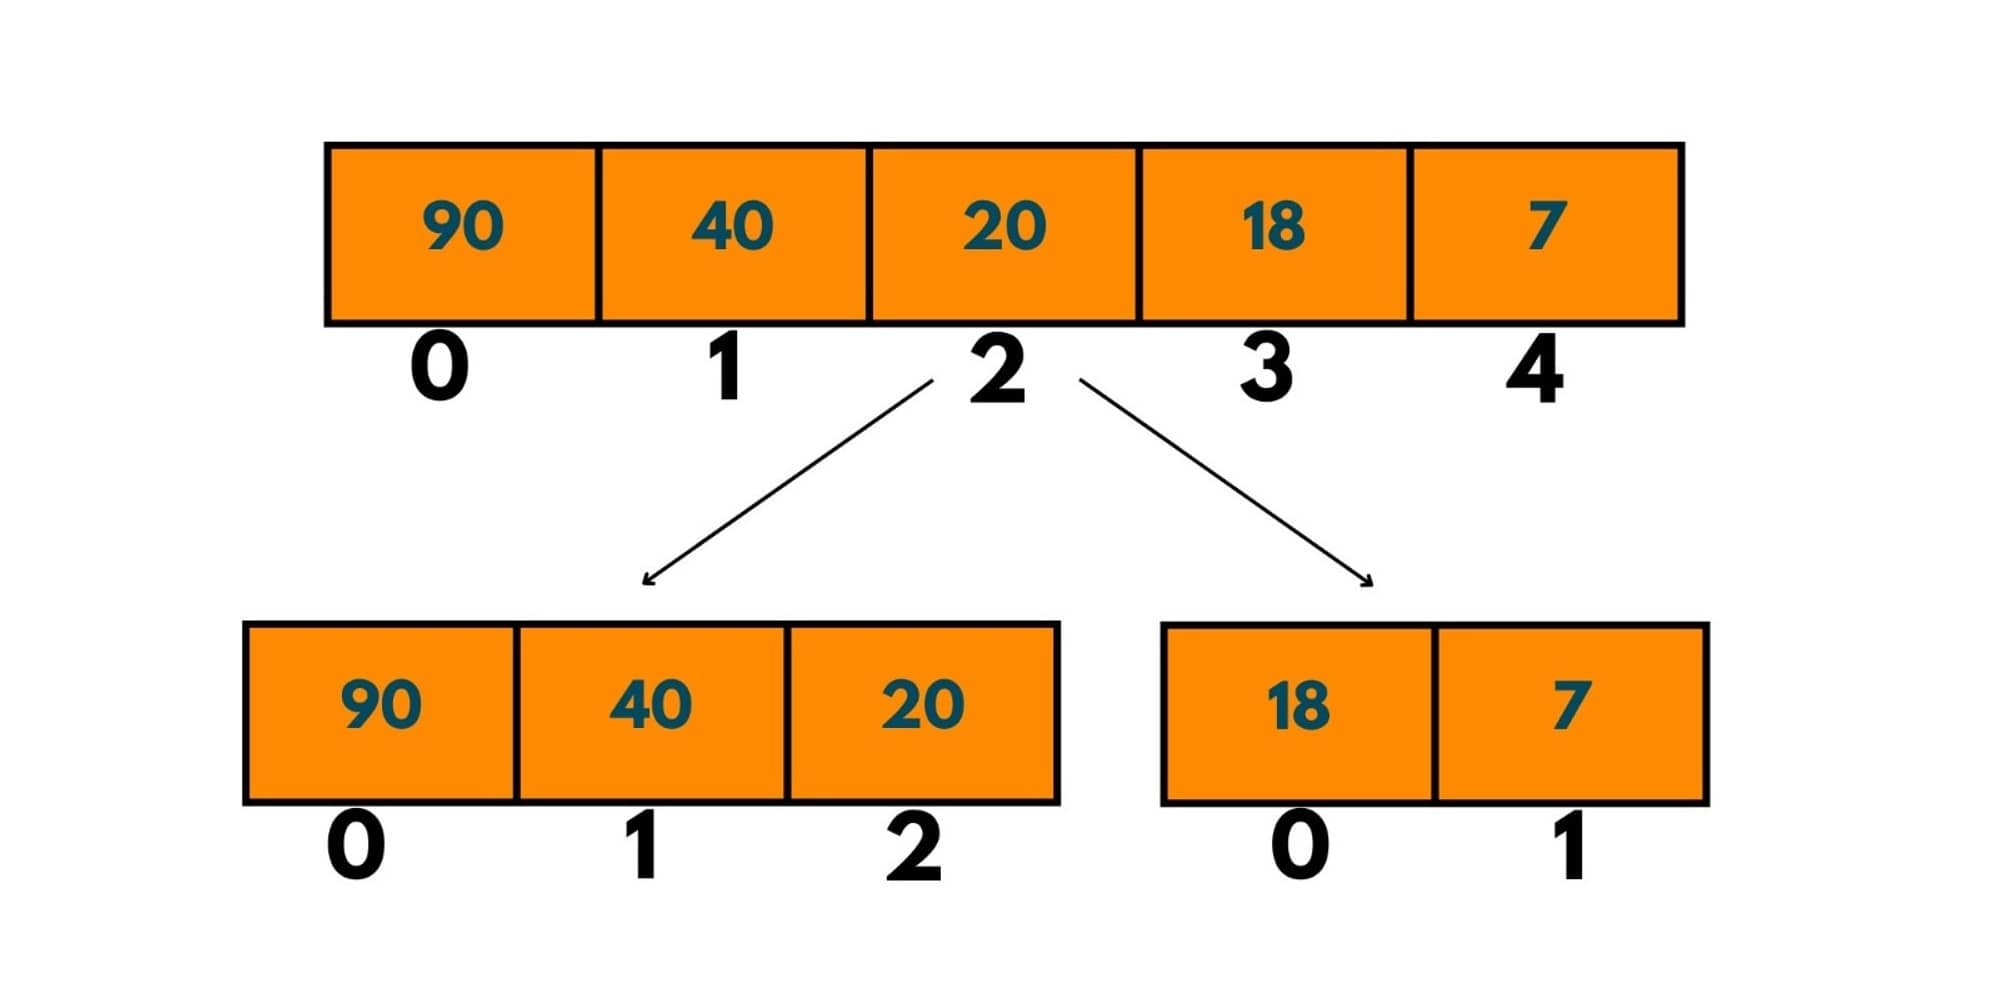 merge sort example 2